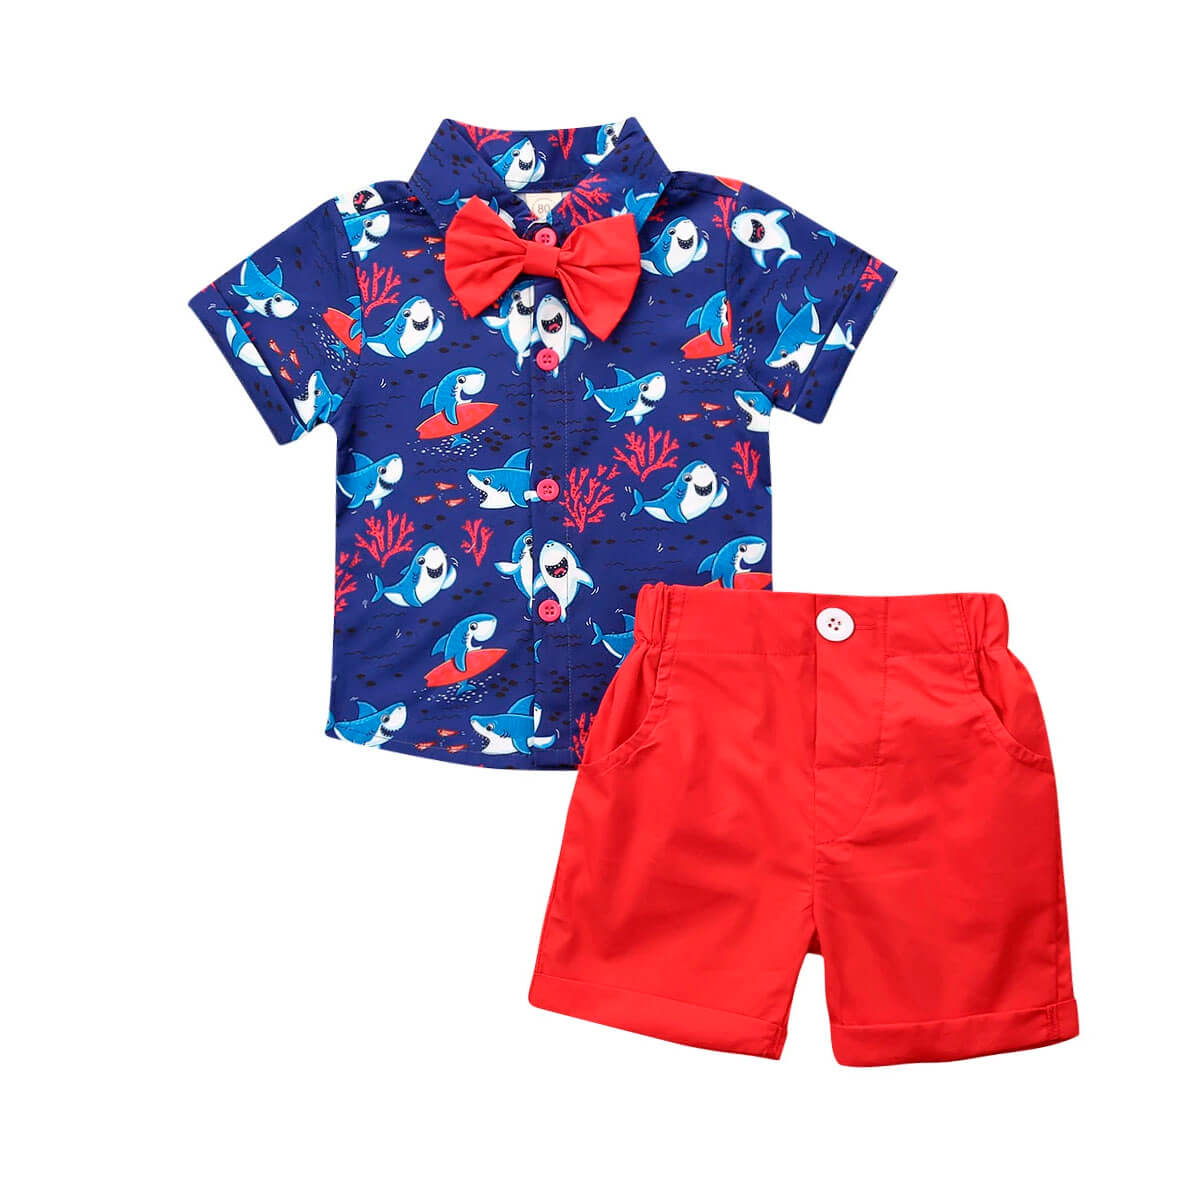 Shark Red Shorts Toddler Set